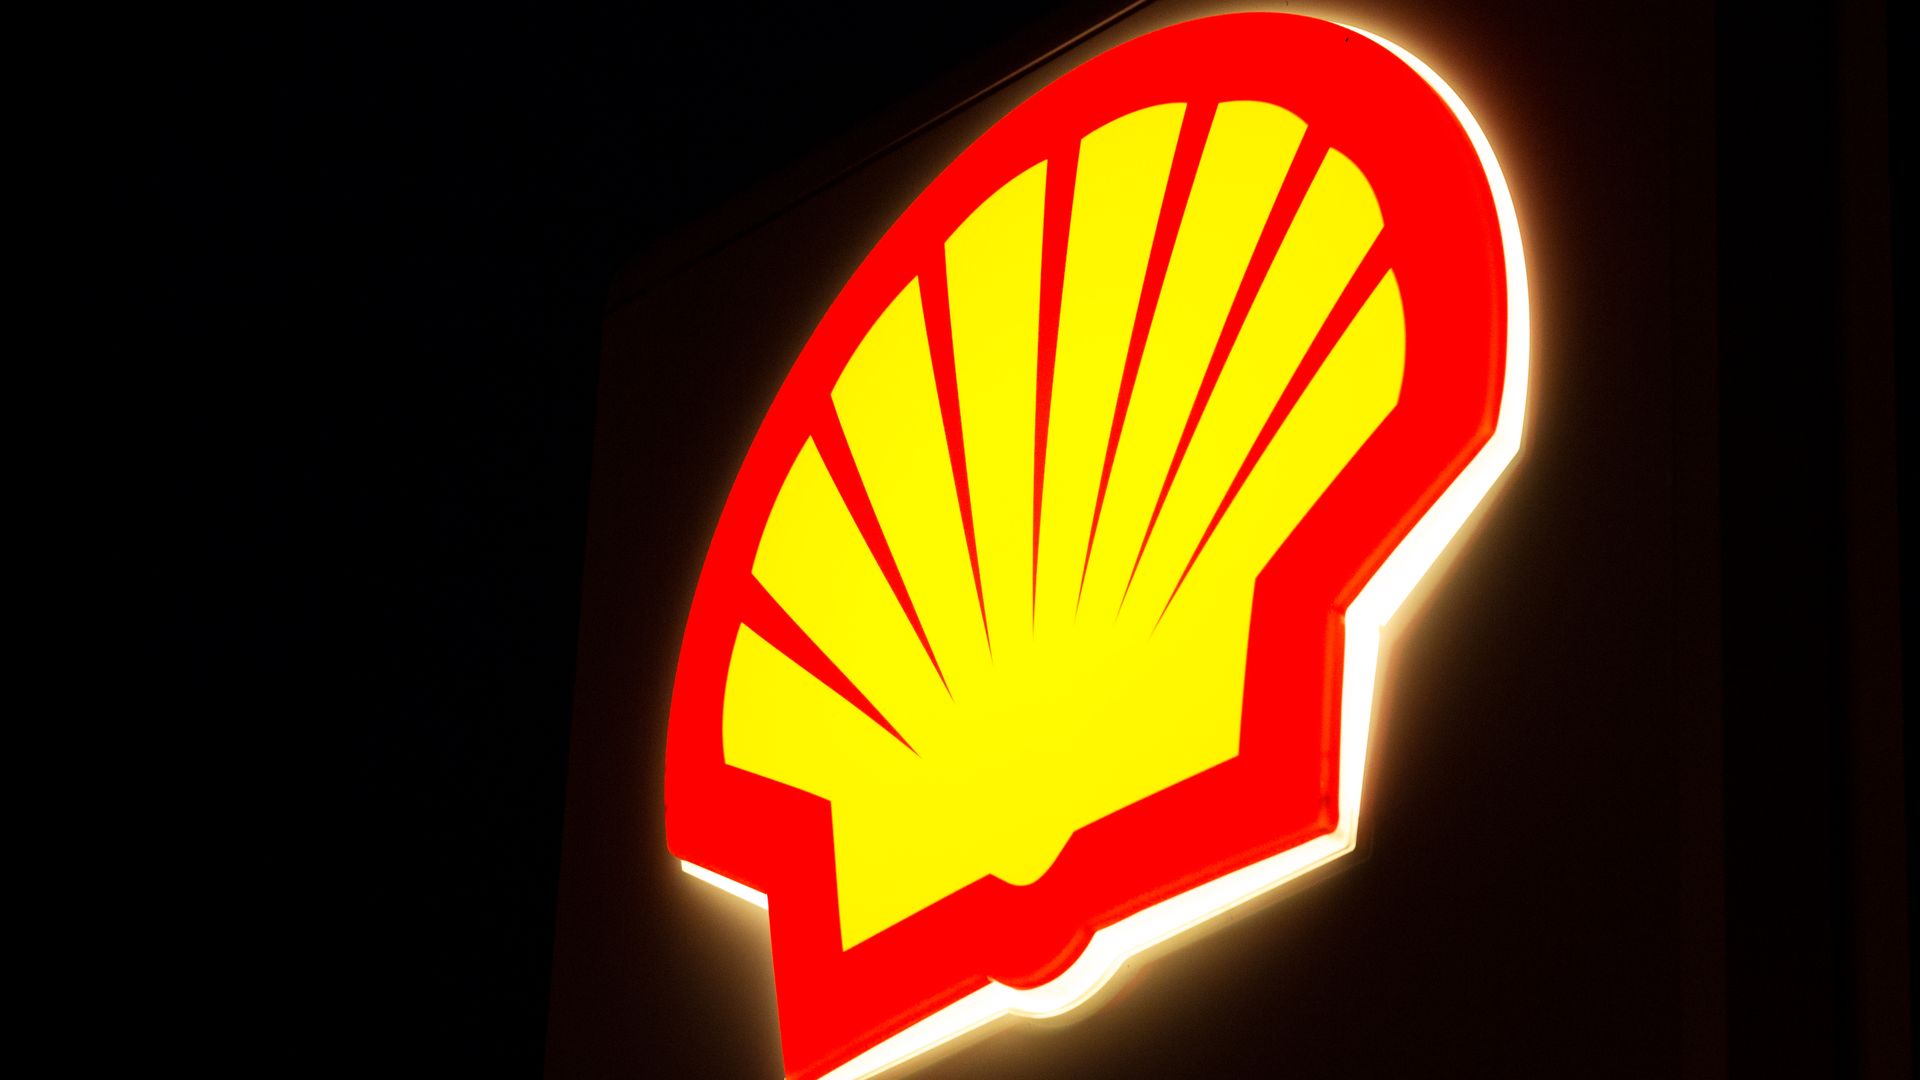 Shell petrol station logo